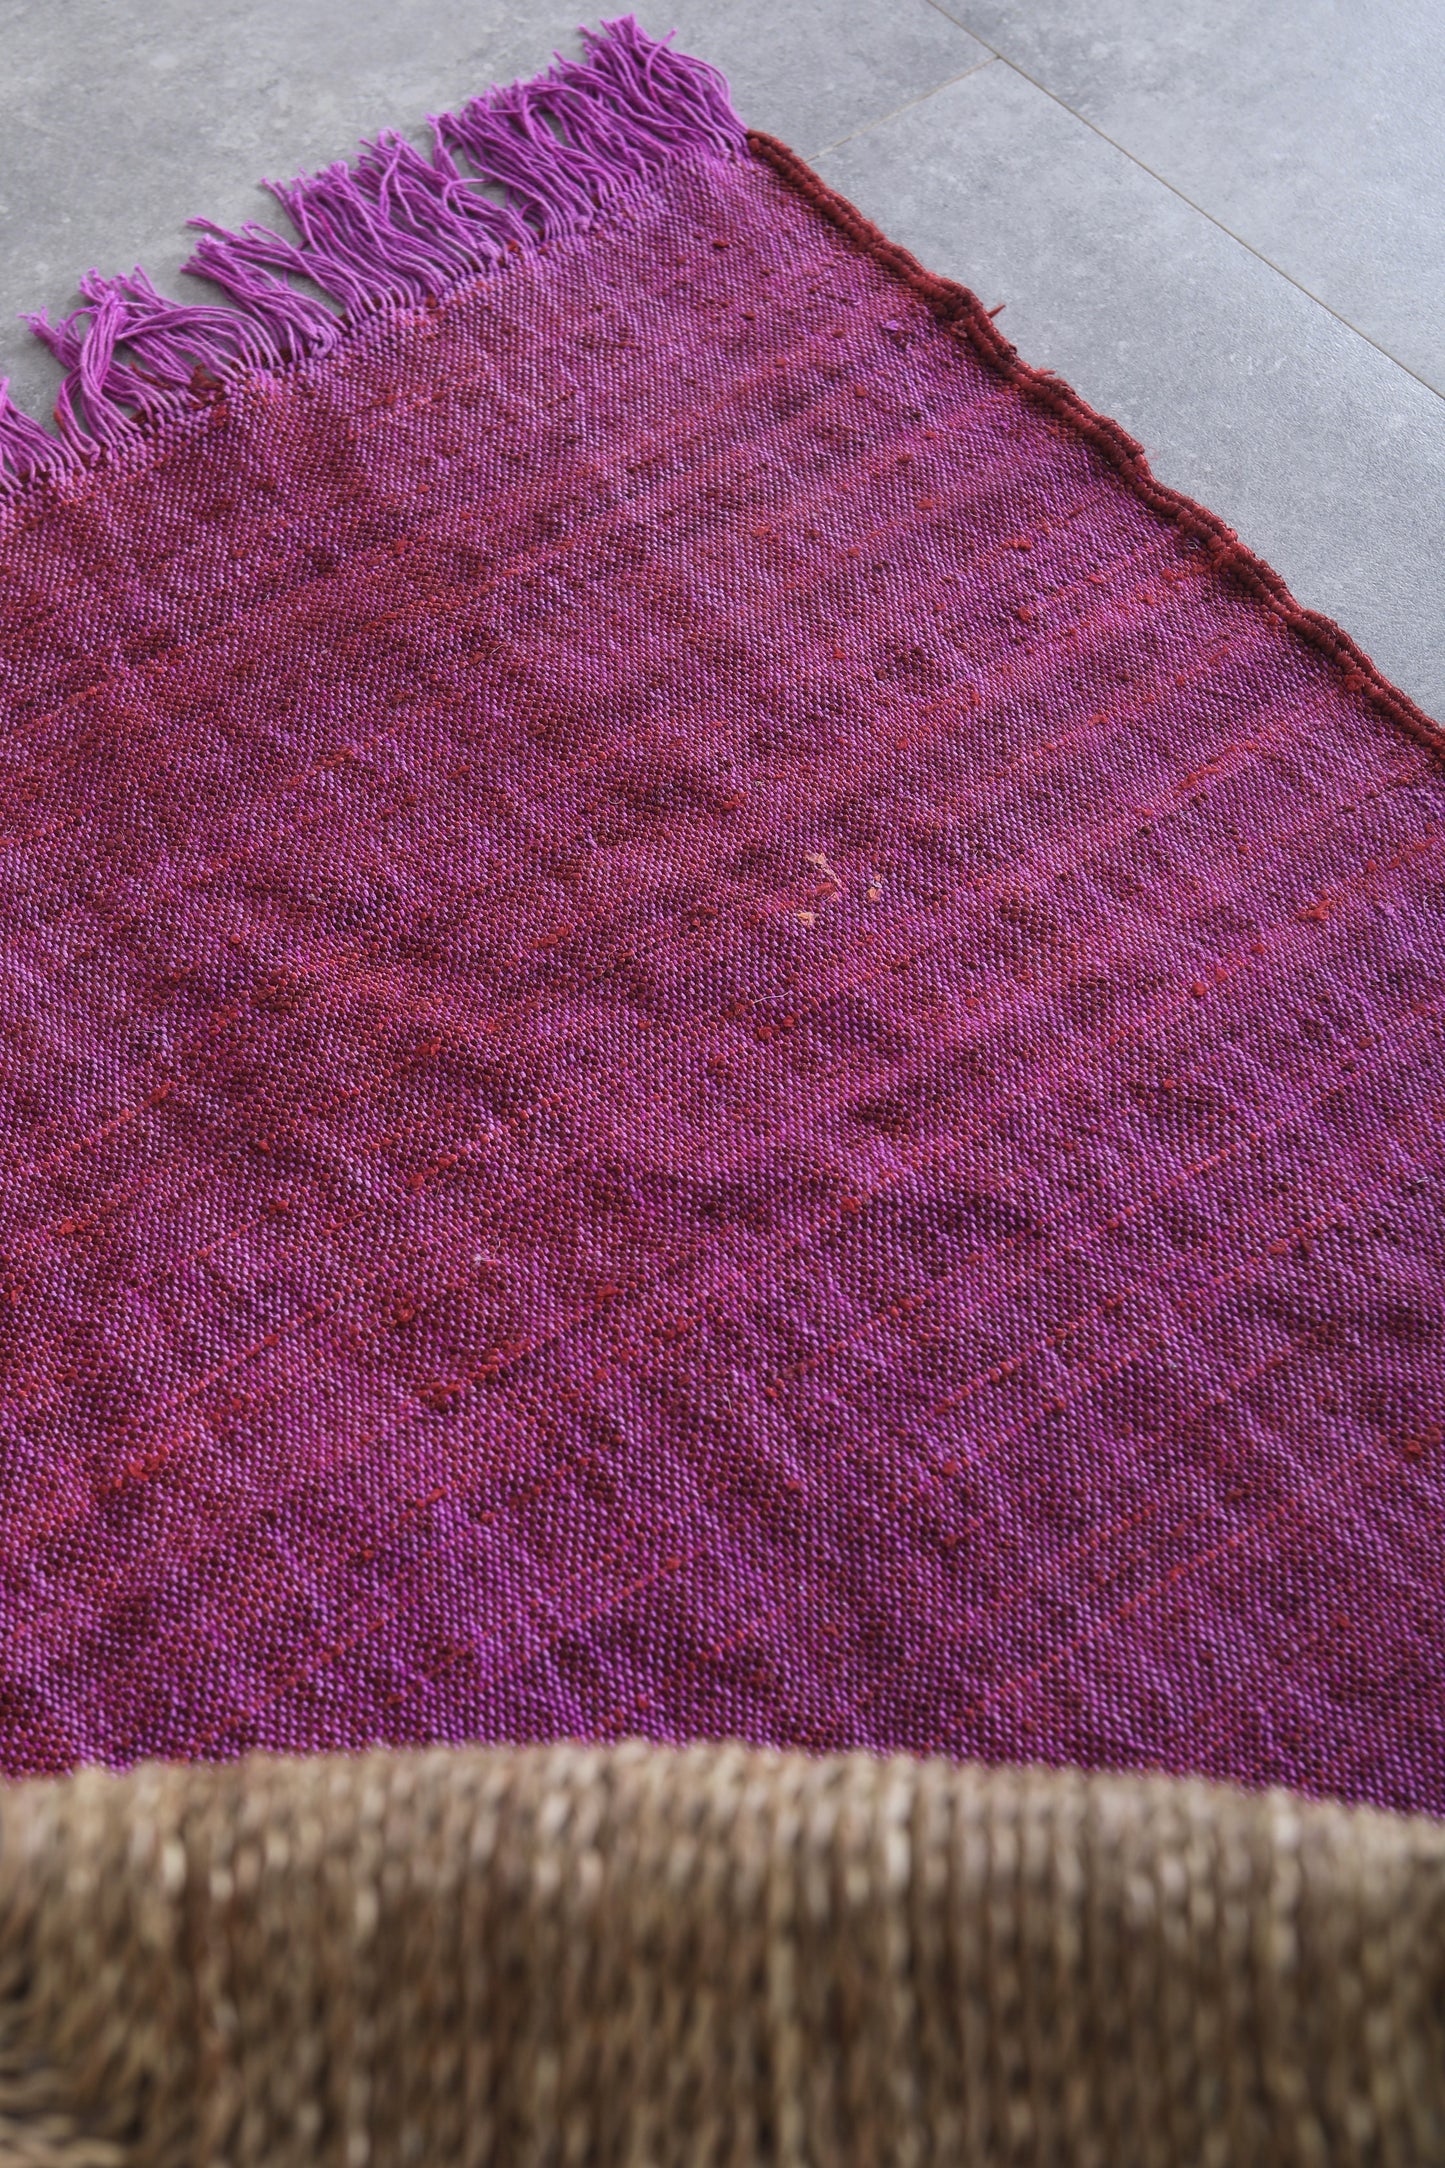 Moroccan rug 2.2 X 2.6 Feet - Handwoven Kilim